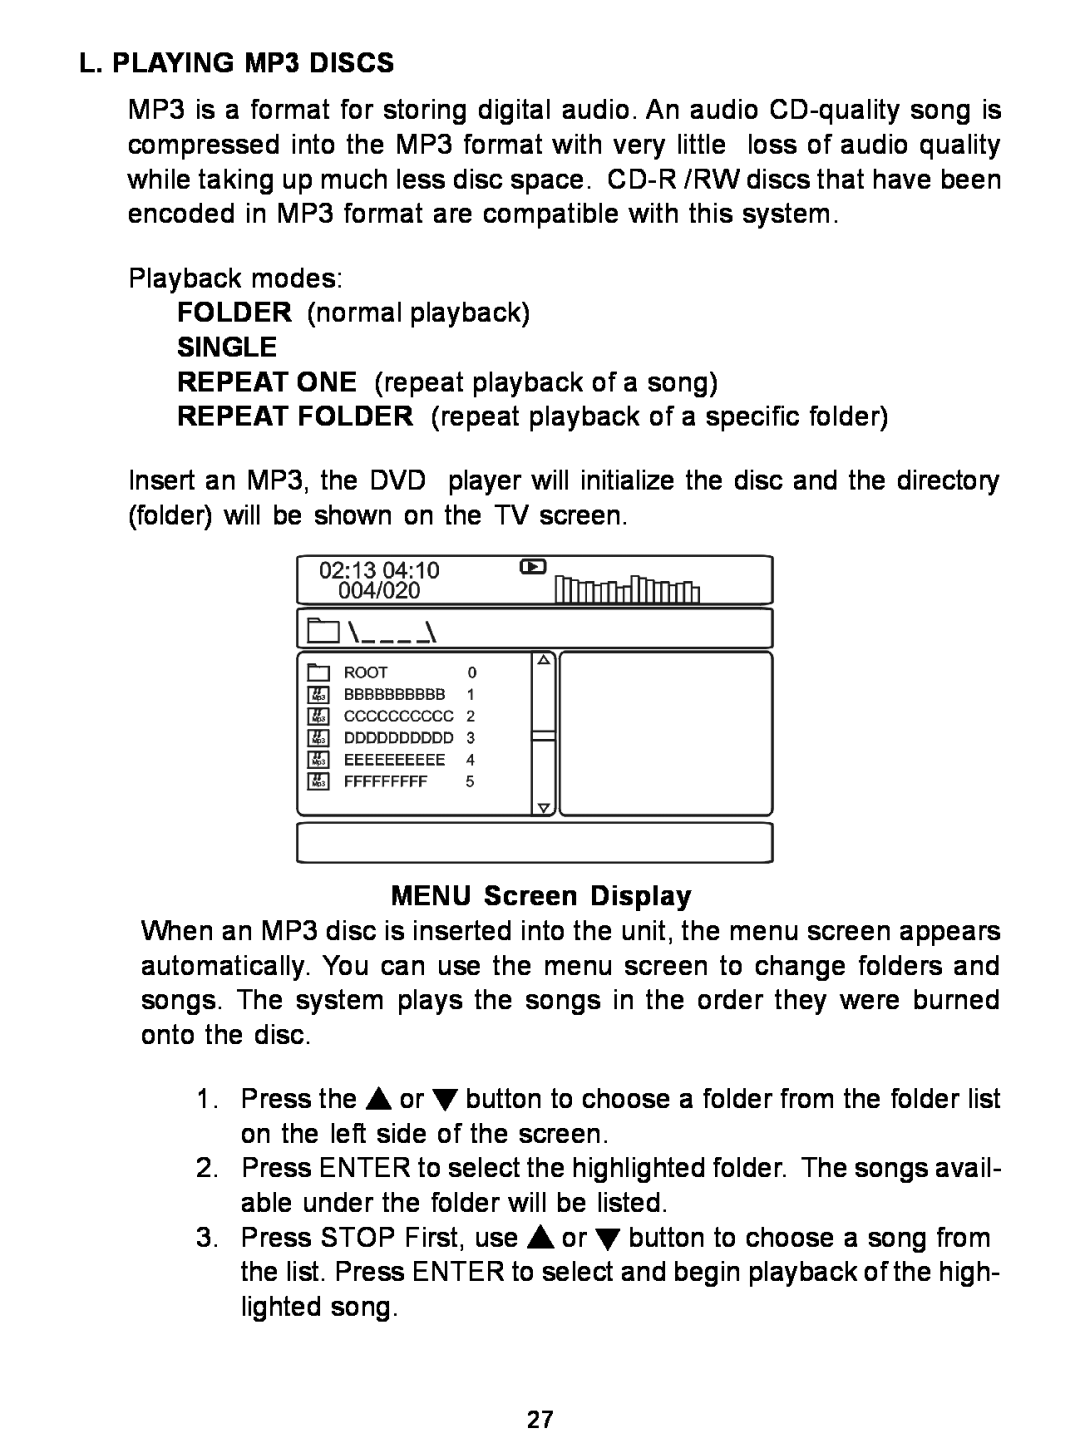 Audiovox D1726 manual L. PLAYING MP3 DISCS, Single, MENU Screen Display 